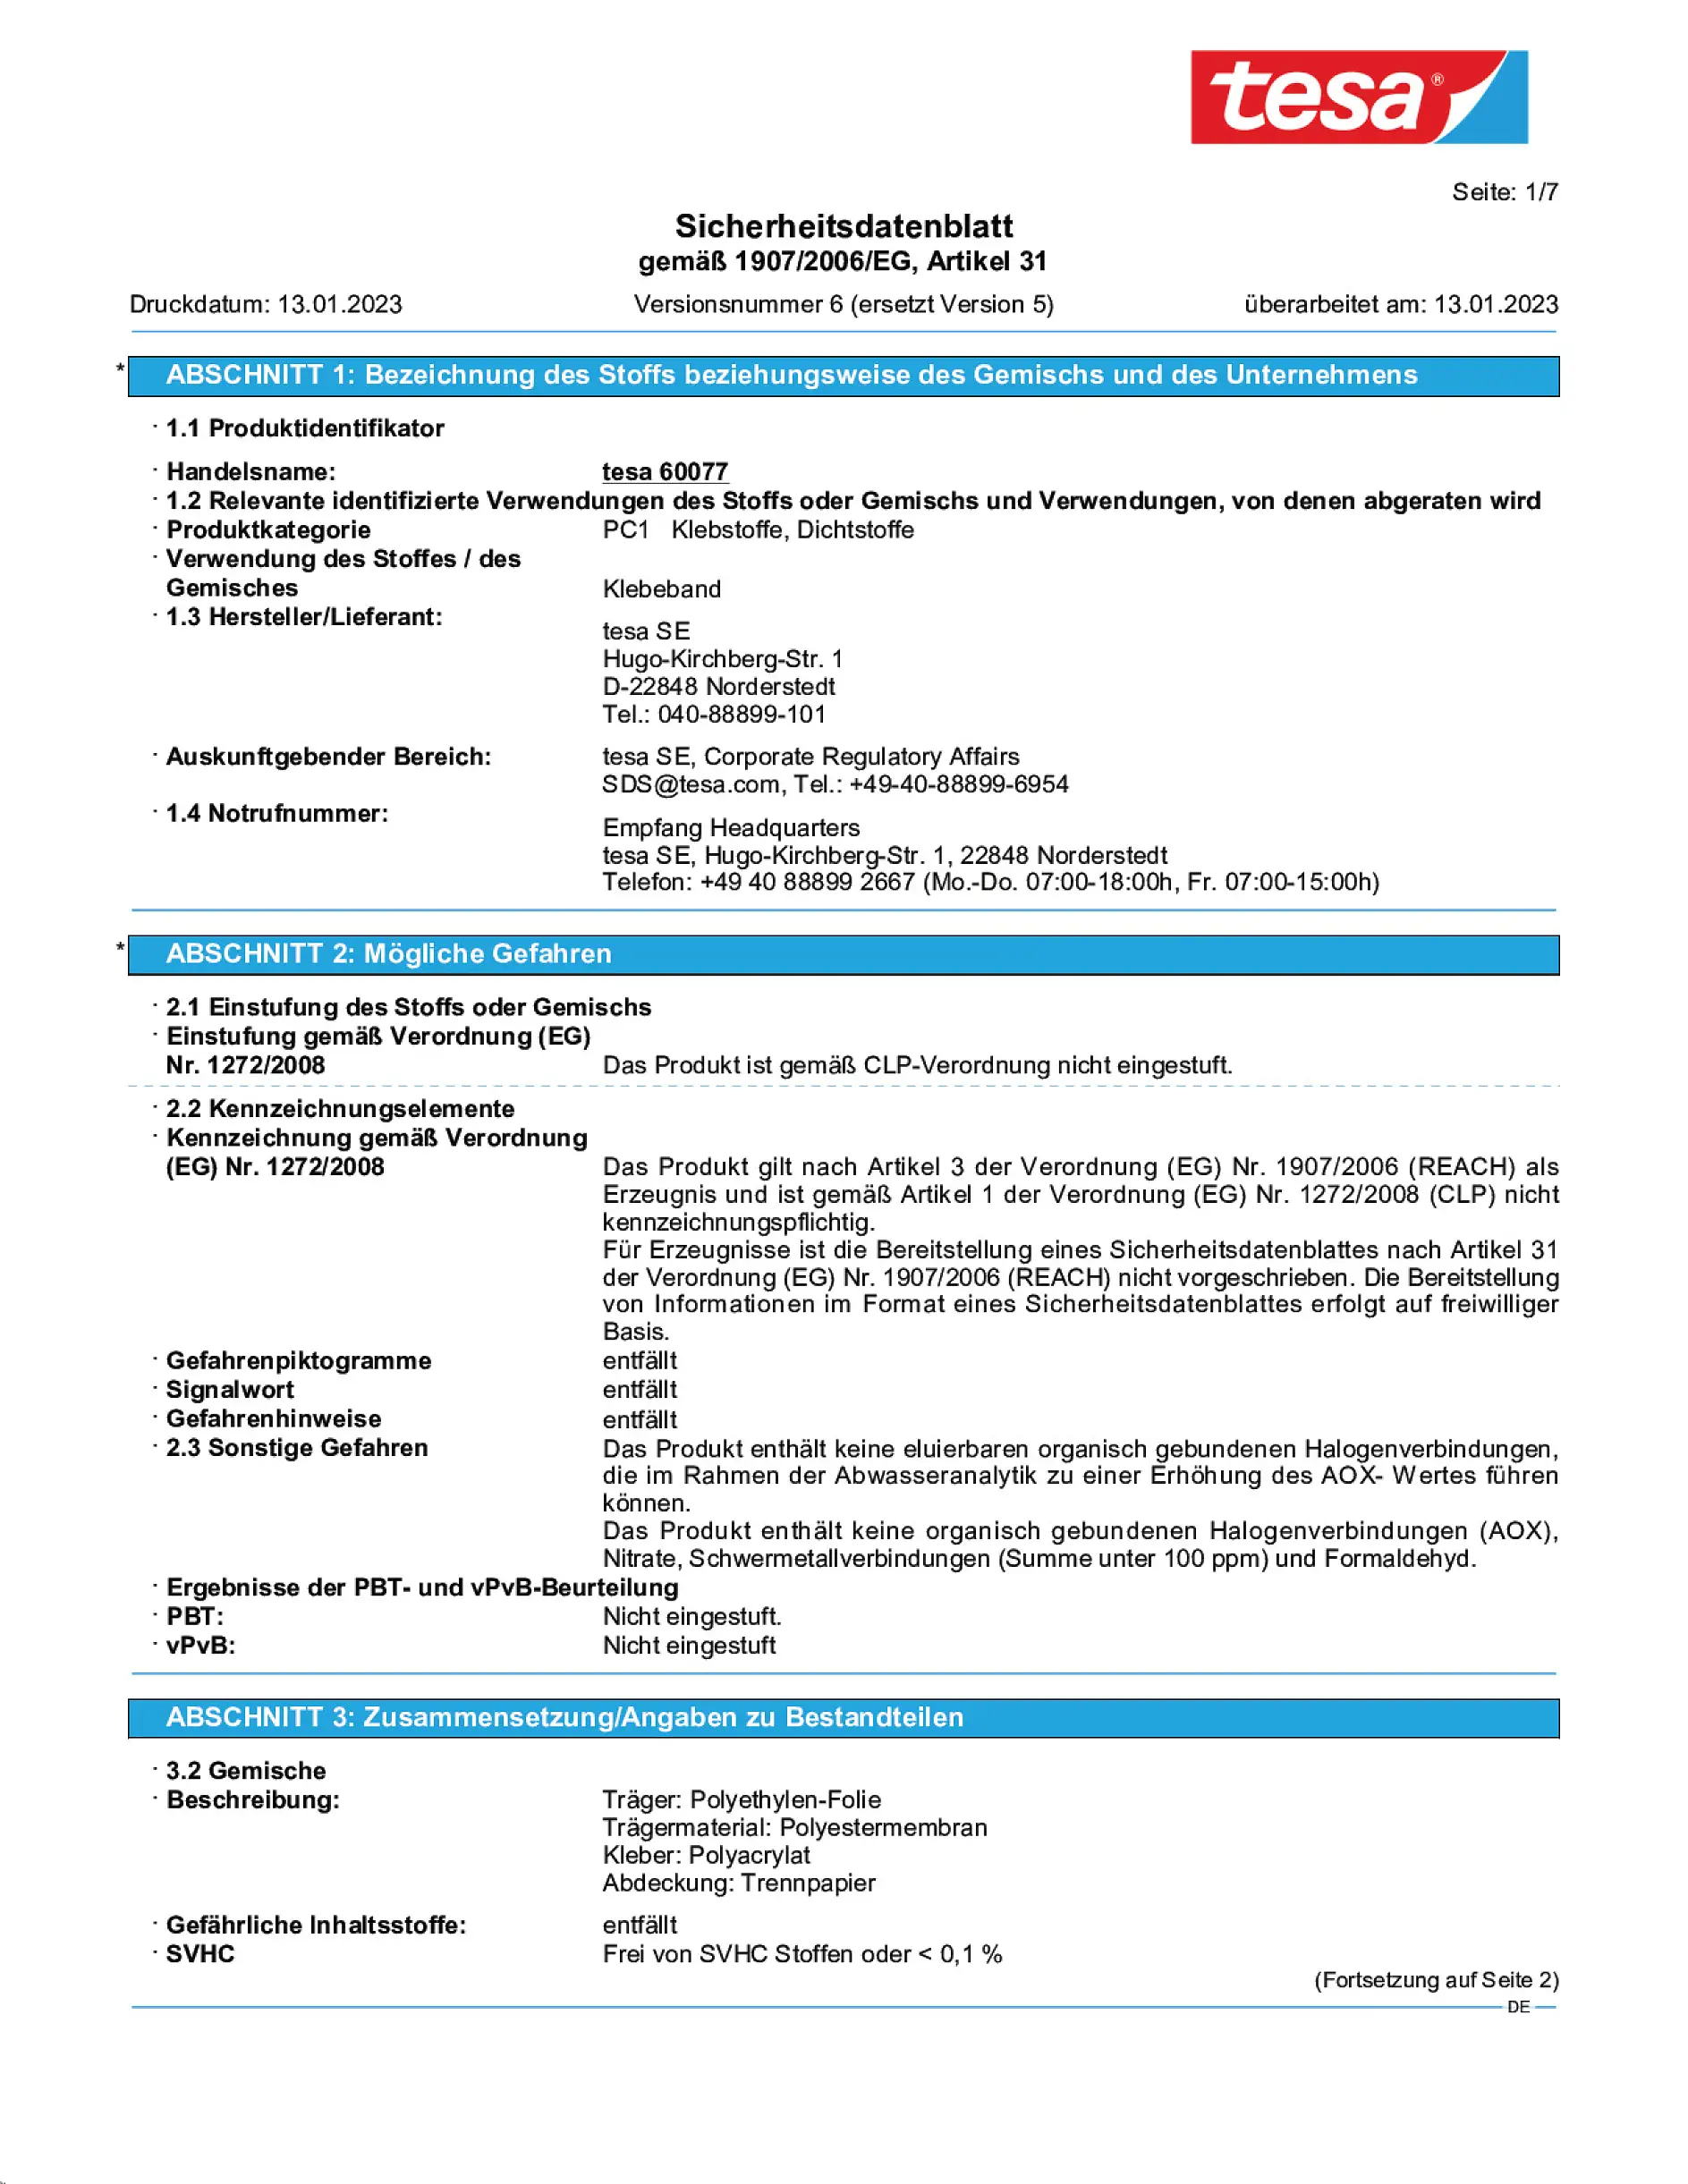 Safety data sheet_tesa® Professional 60077_de-DE_v6